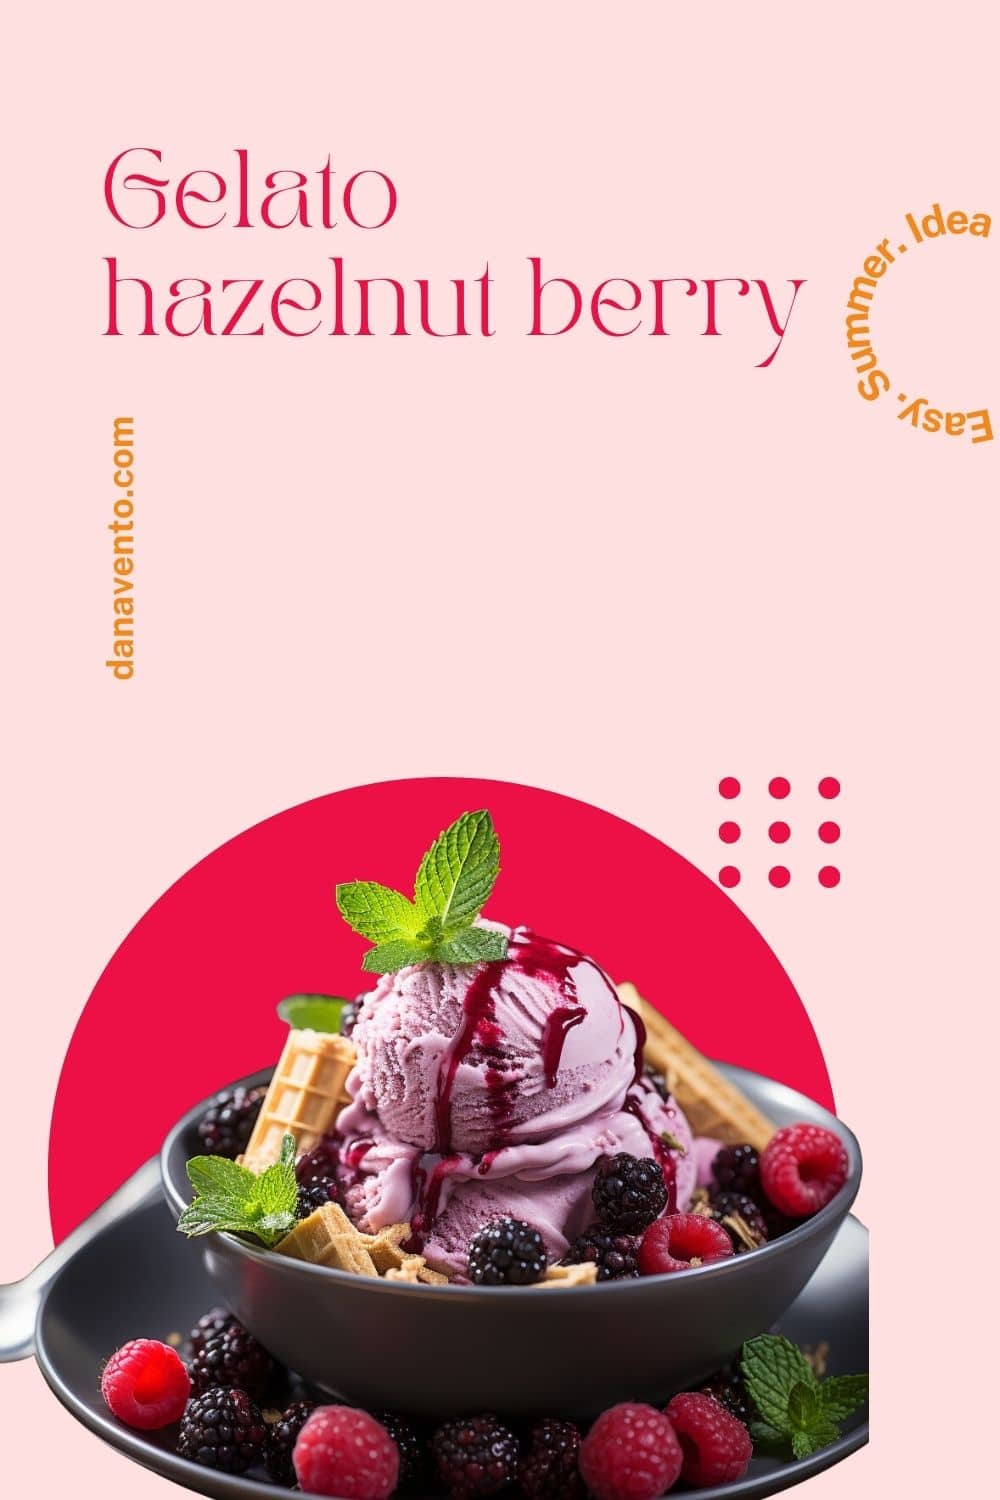 hazelnut-berry gelato summer in a bowl